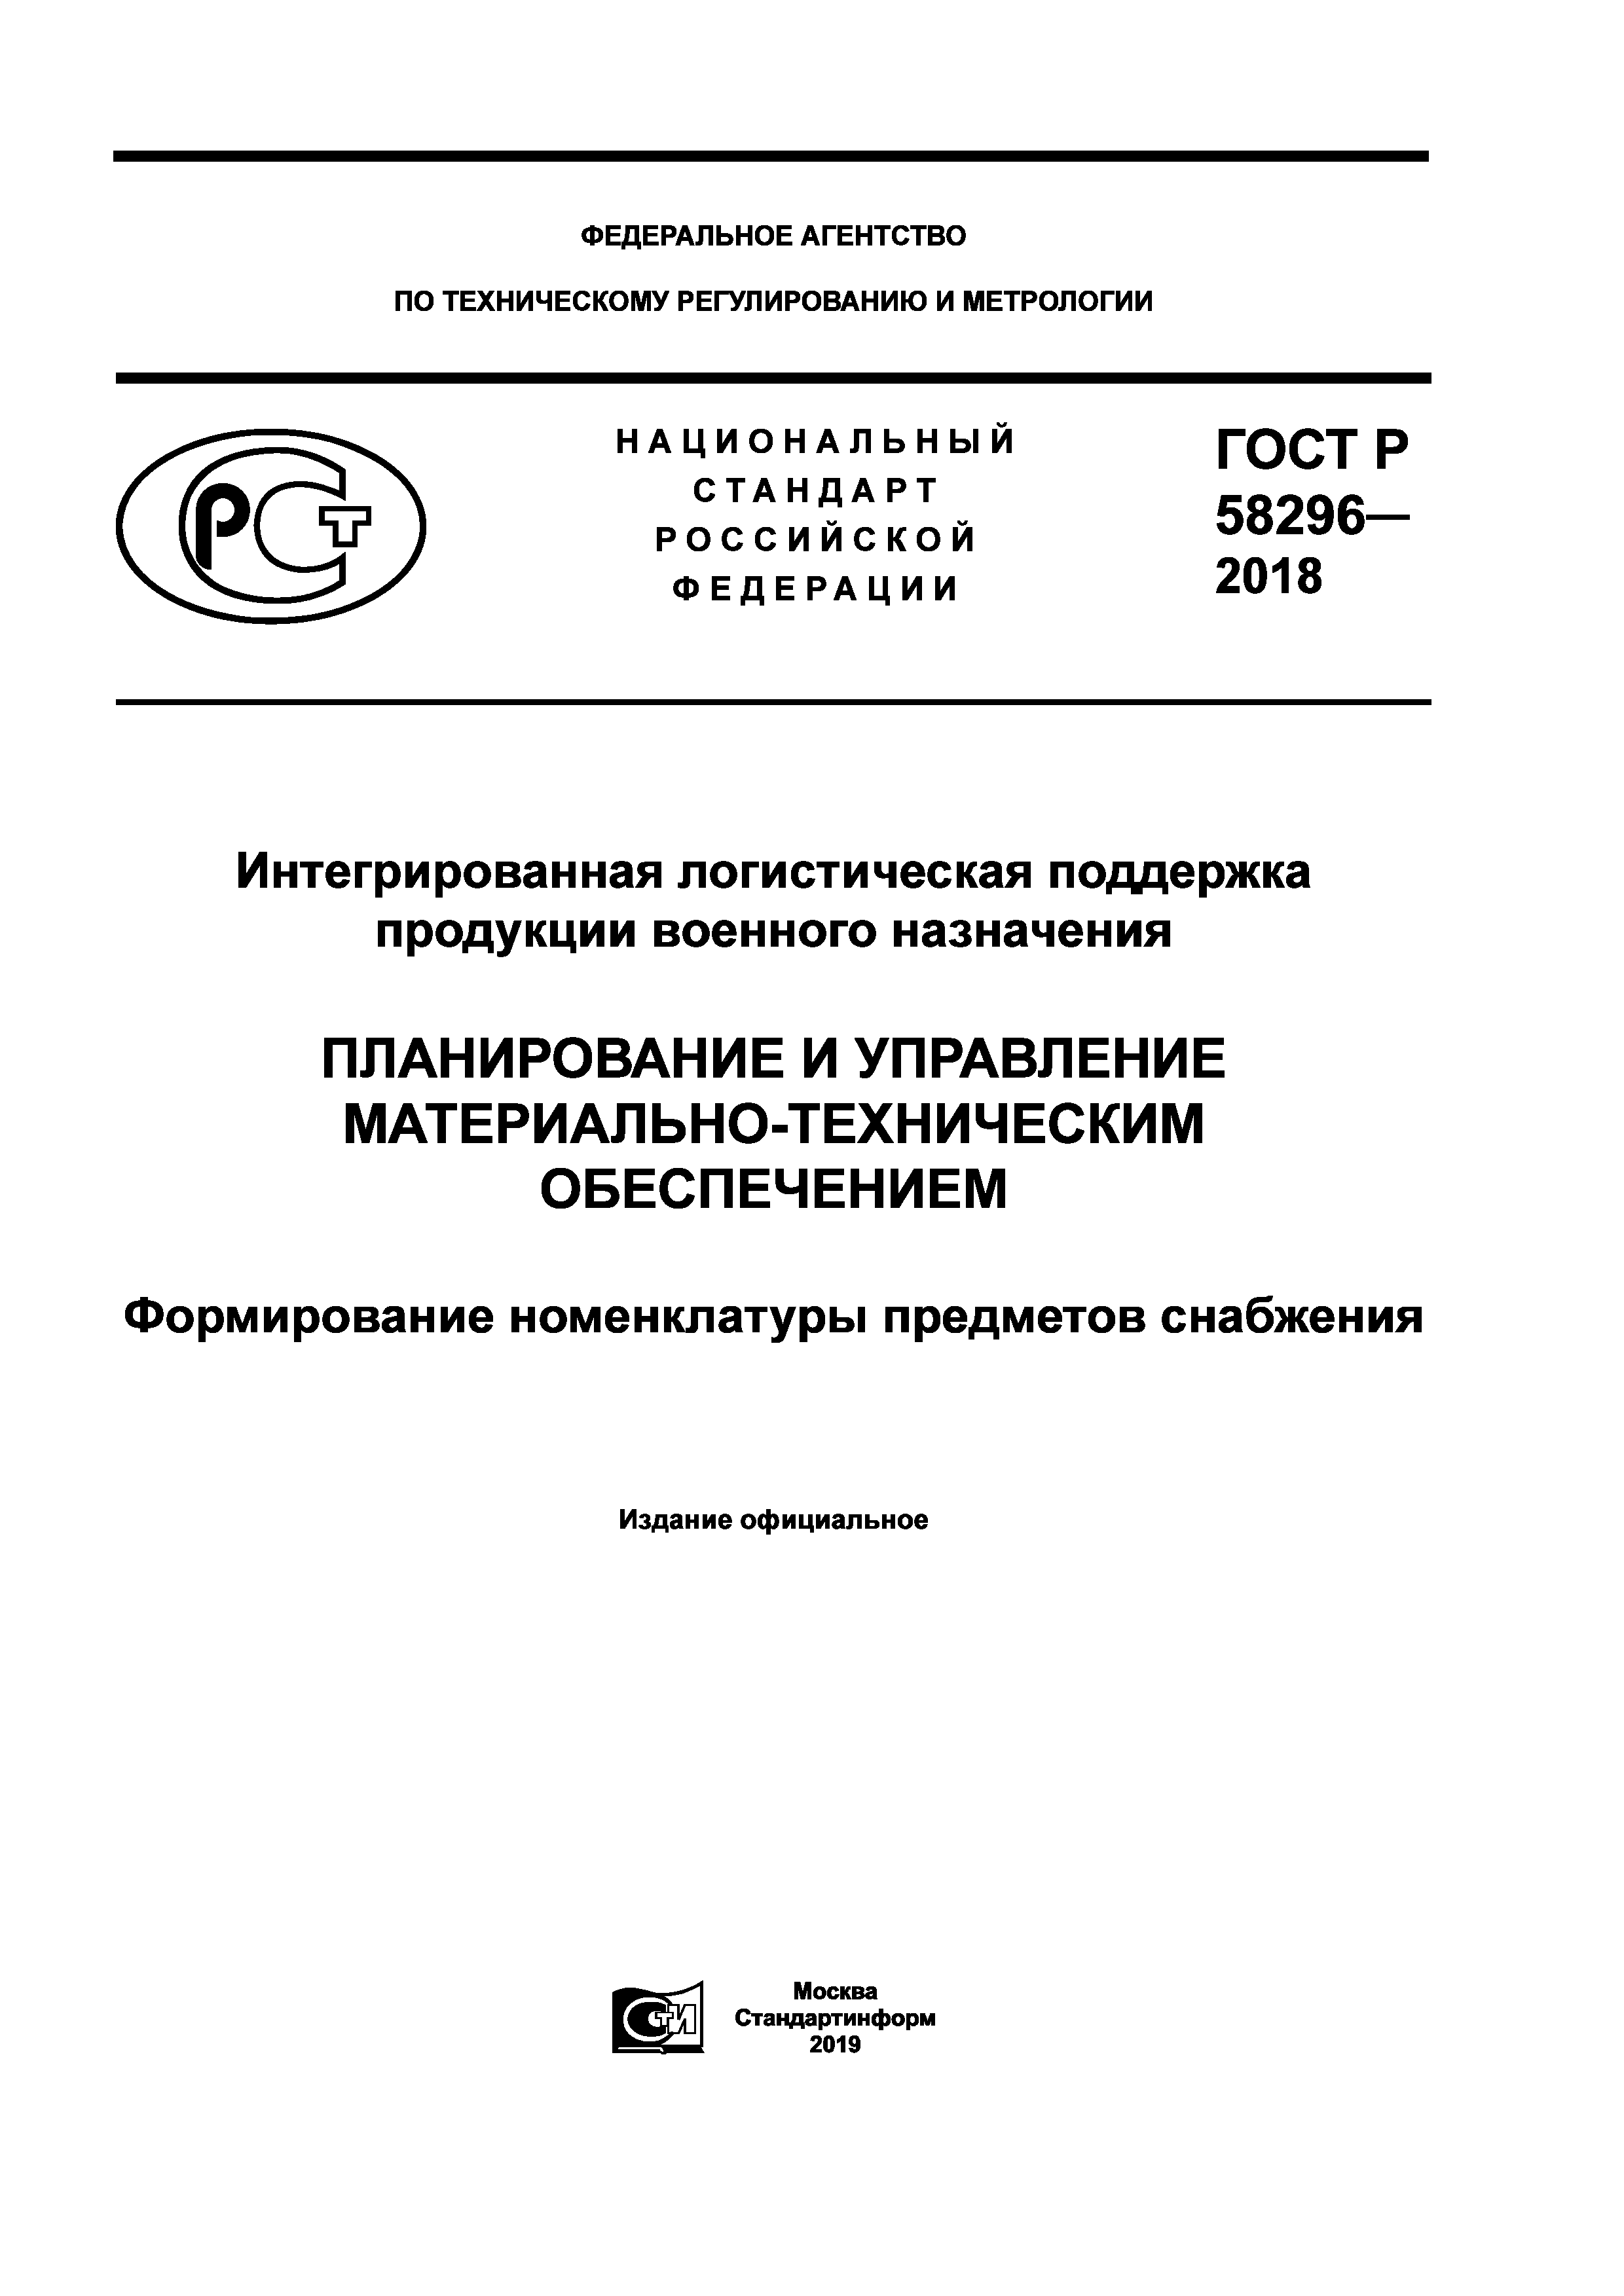 ГОСТ Р 58296-2018